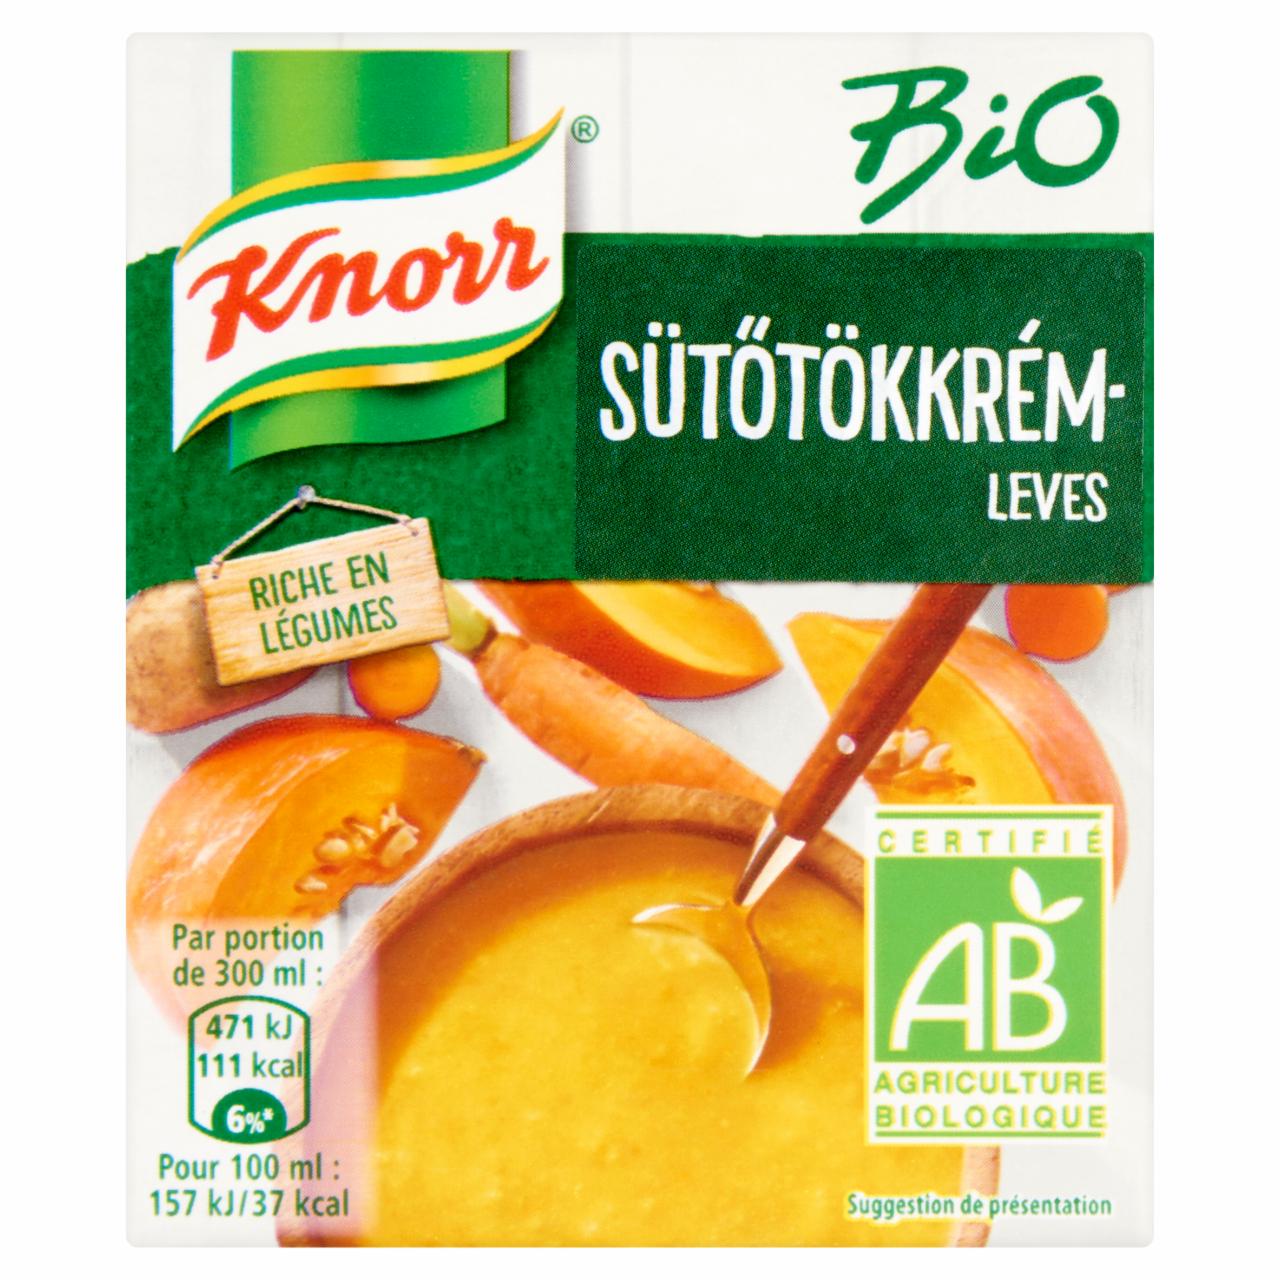 Képek - Knorr BIO sütőtökkrémleves 300 ml